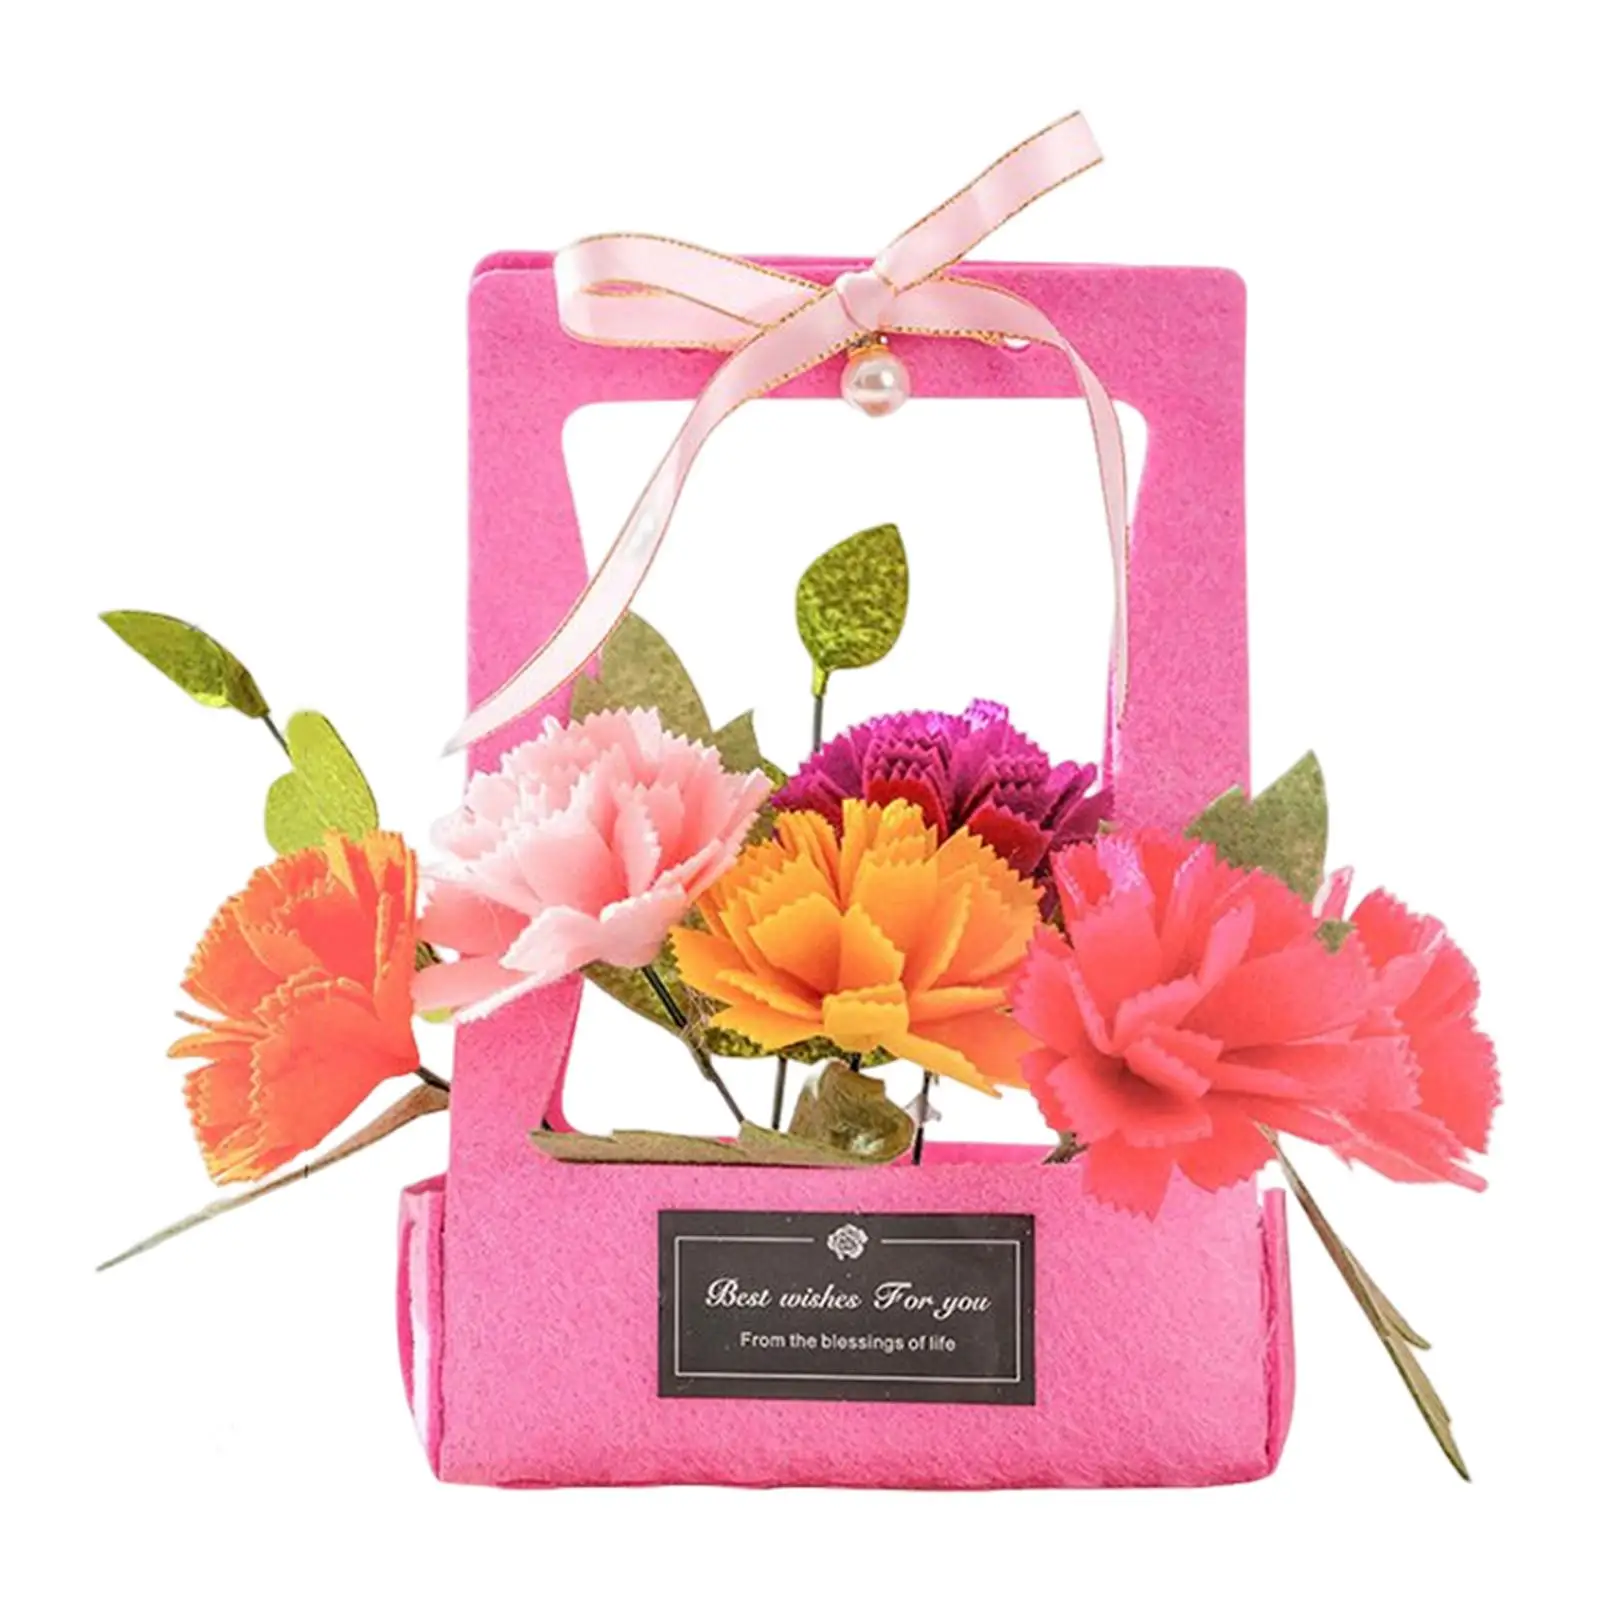 3D DIY Felt Flower Basket Craft Kit Kids Toy Mothers Day Gift Floral Handmade for Boys Girls Halloween Home Birthday Decor